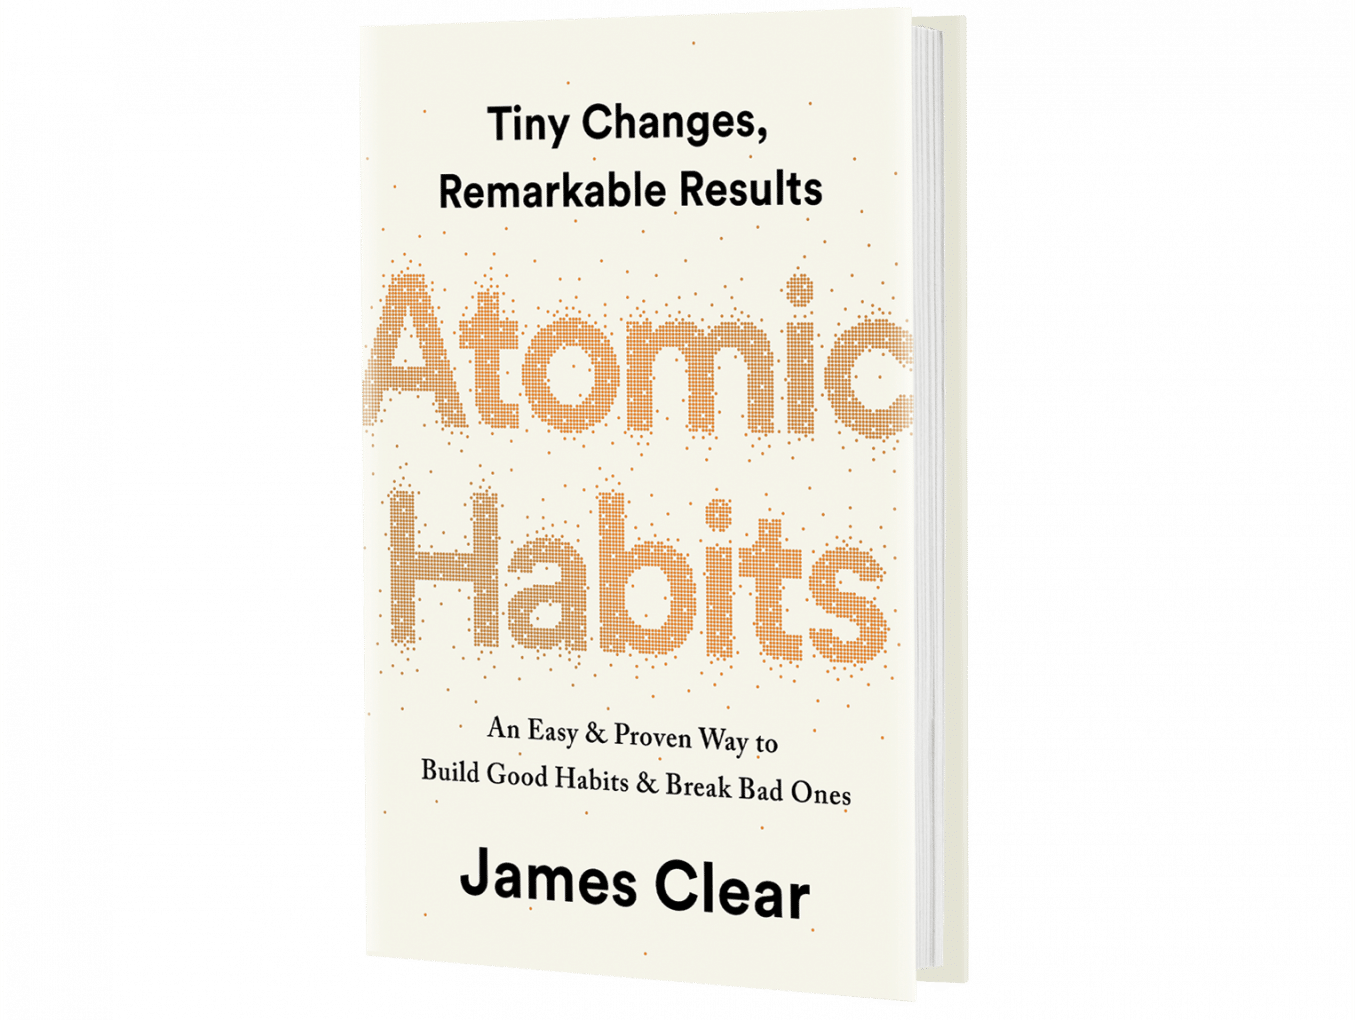 james clear atomic habits cheat sheet